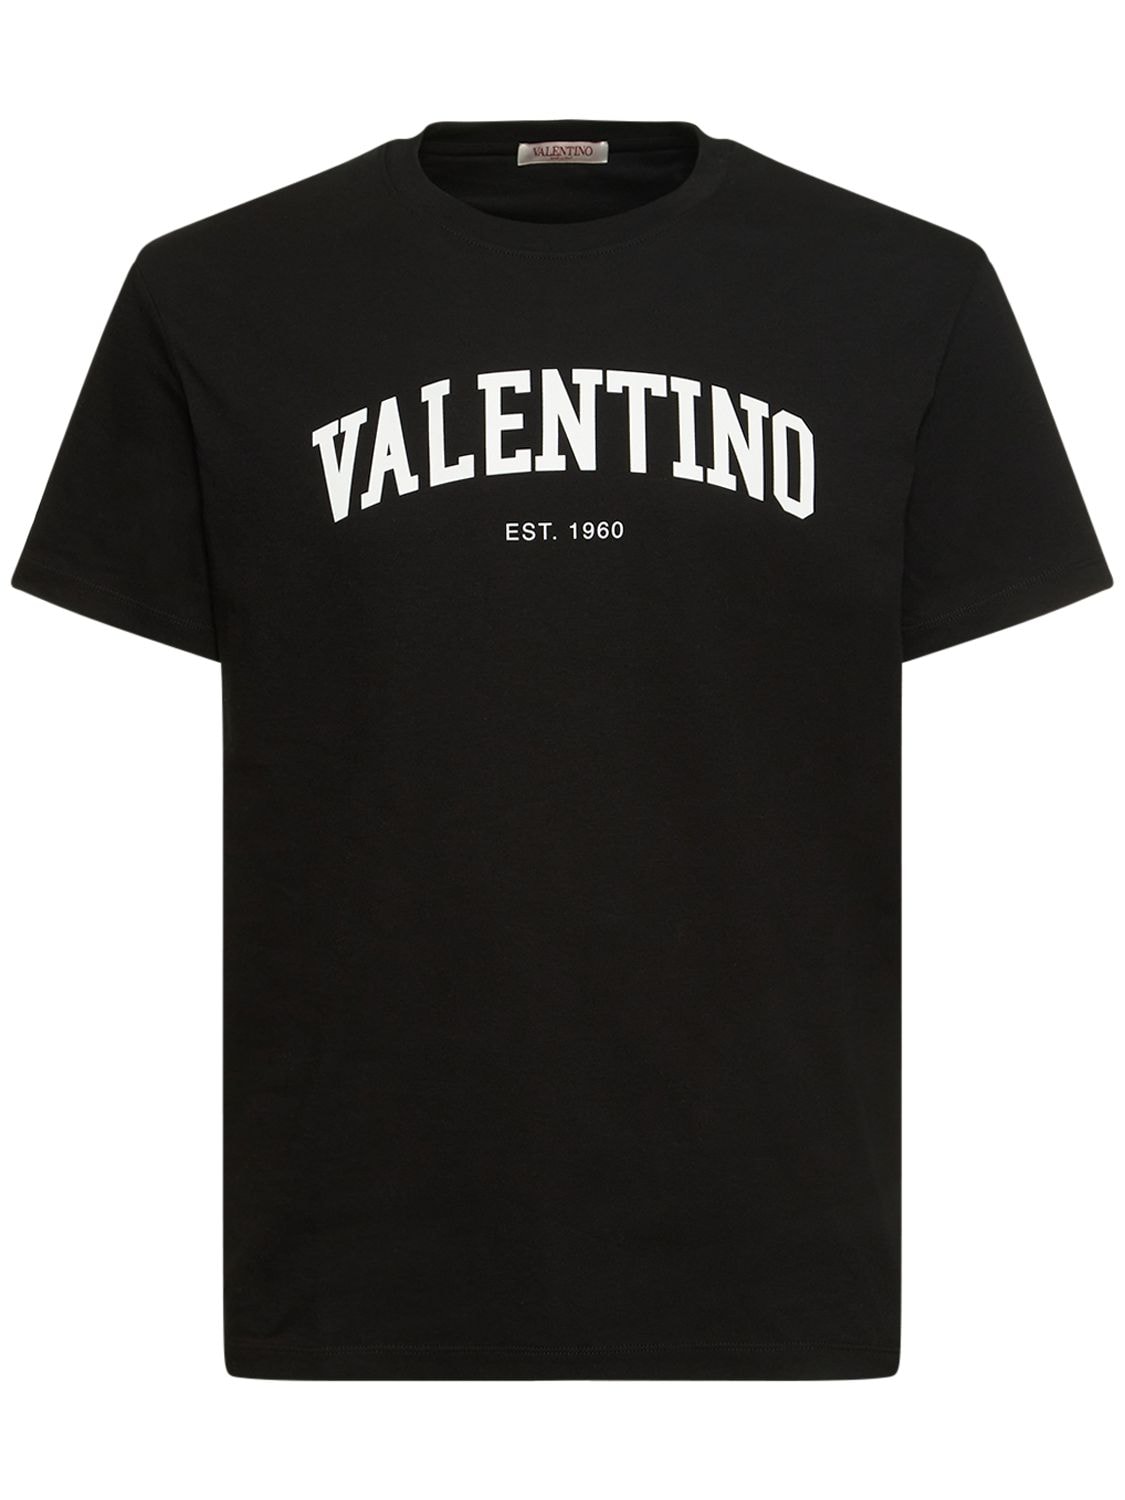 Valentino Printed T-shirt  In Black,white